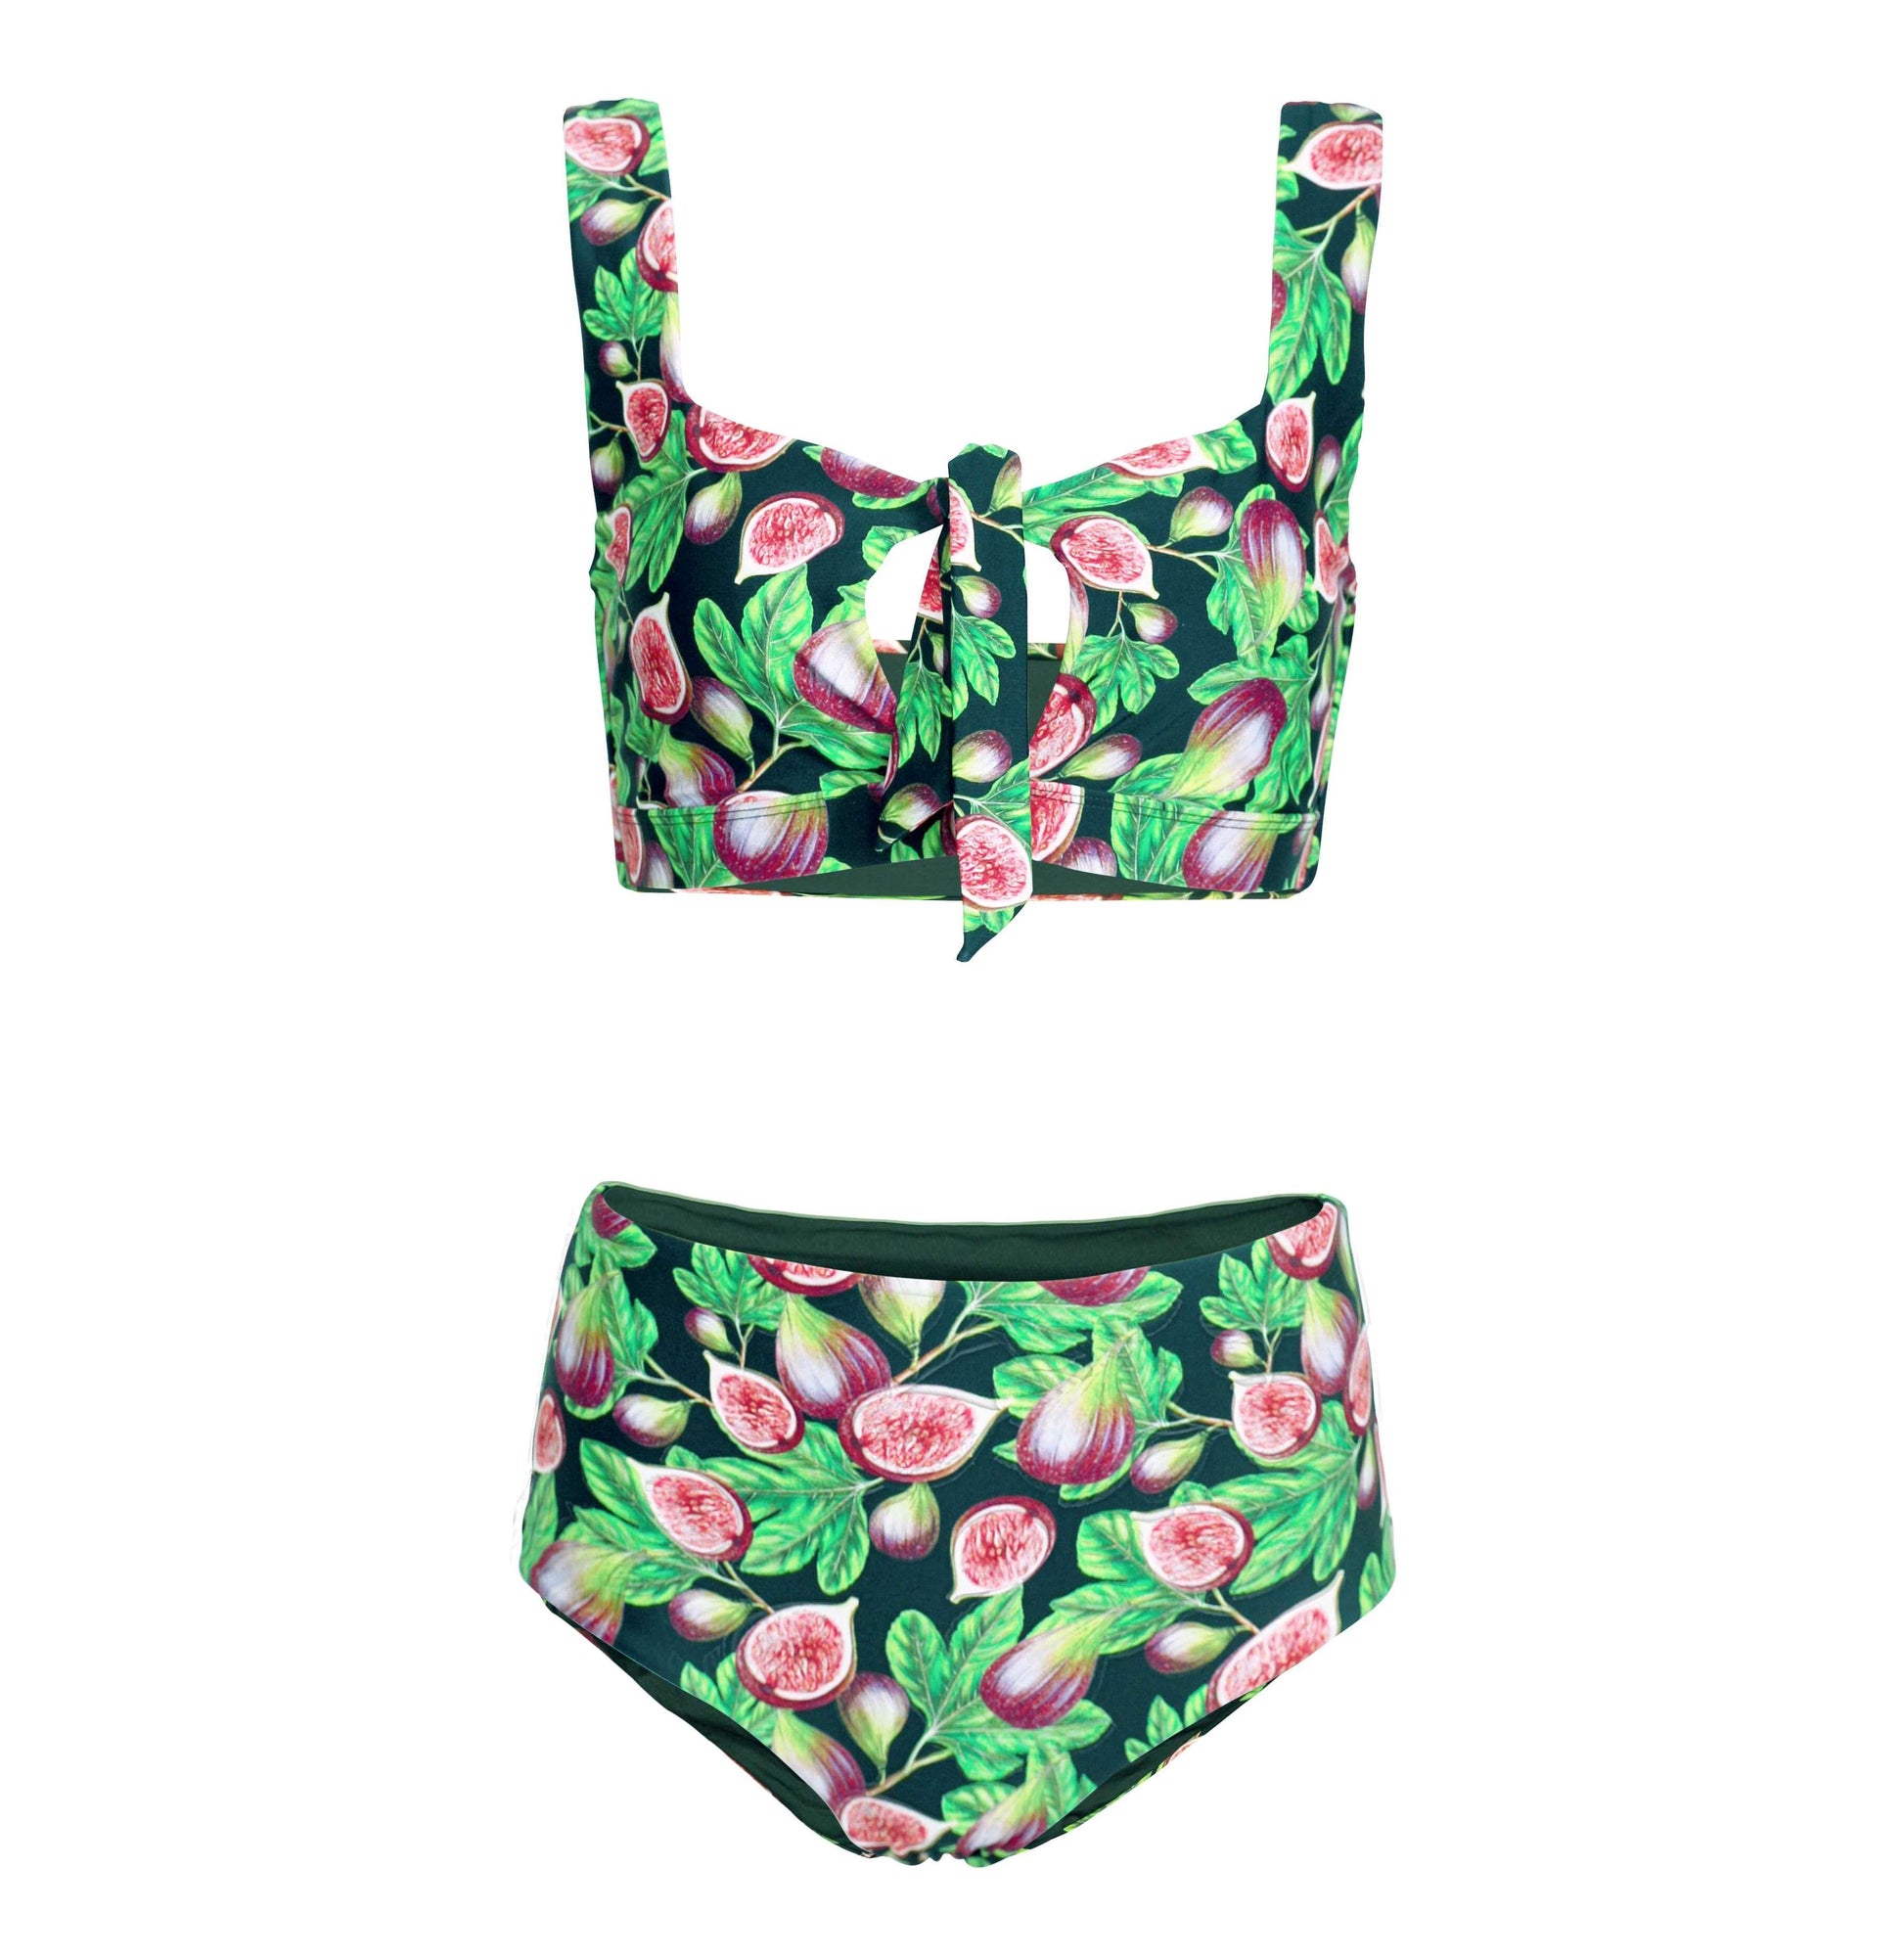 VALENTINA 'Figs’ Bikini Bottoms - PLIVATI Swimwear